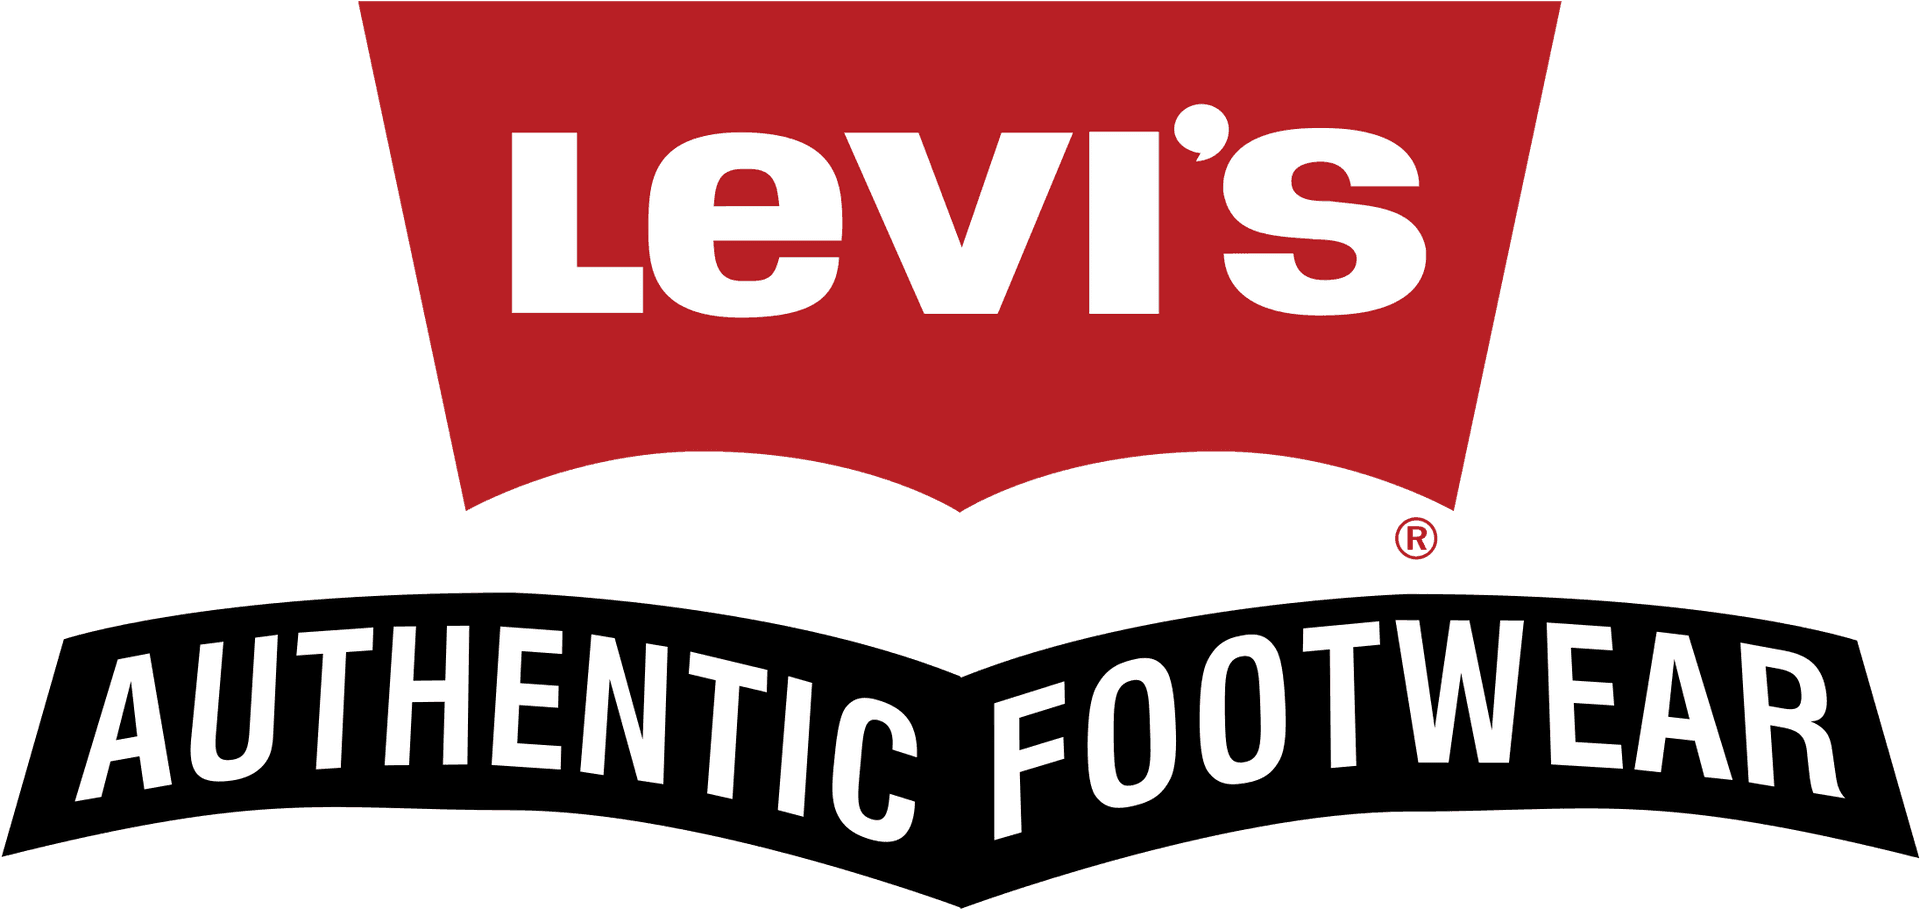 Levis Authentic Footwear Logo PNG